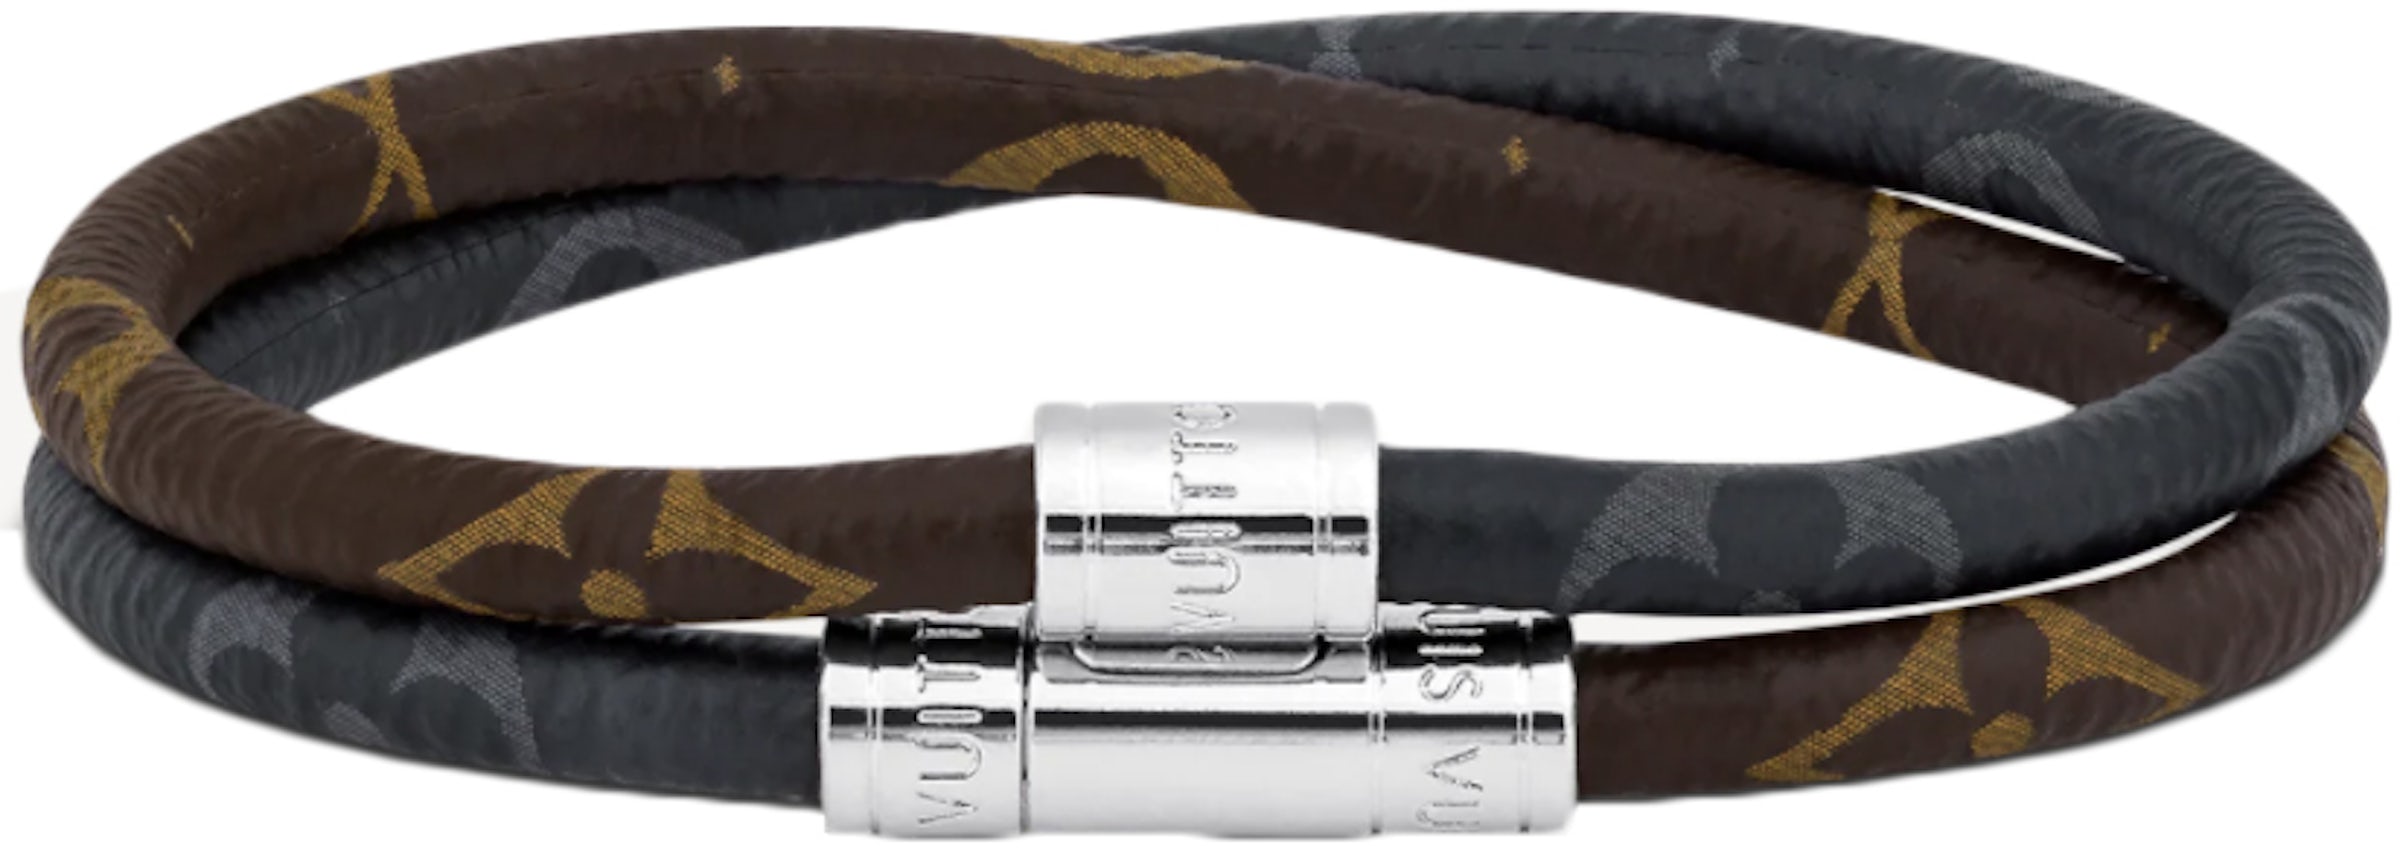 Best Deals for Louis Vuitton Keep It Twice Bracelet